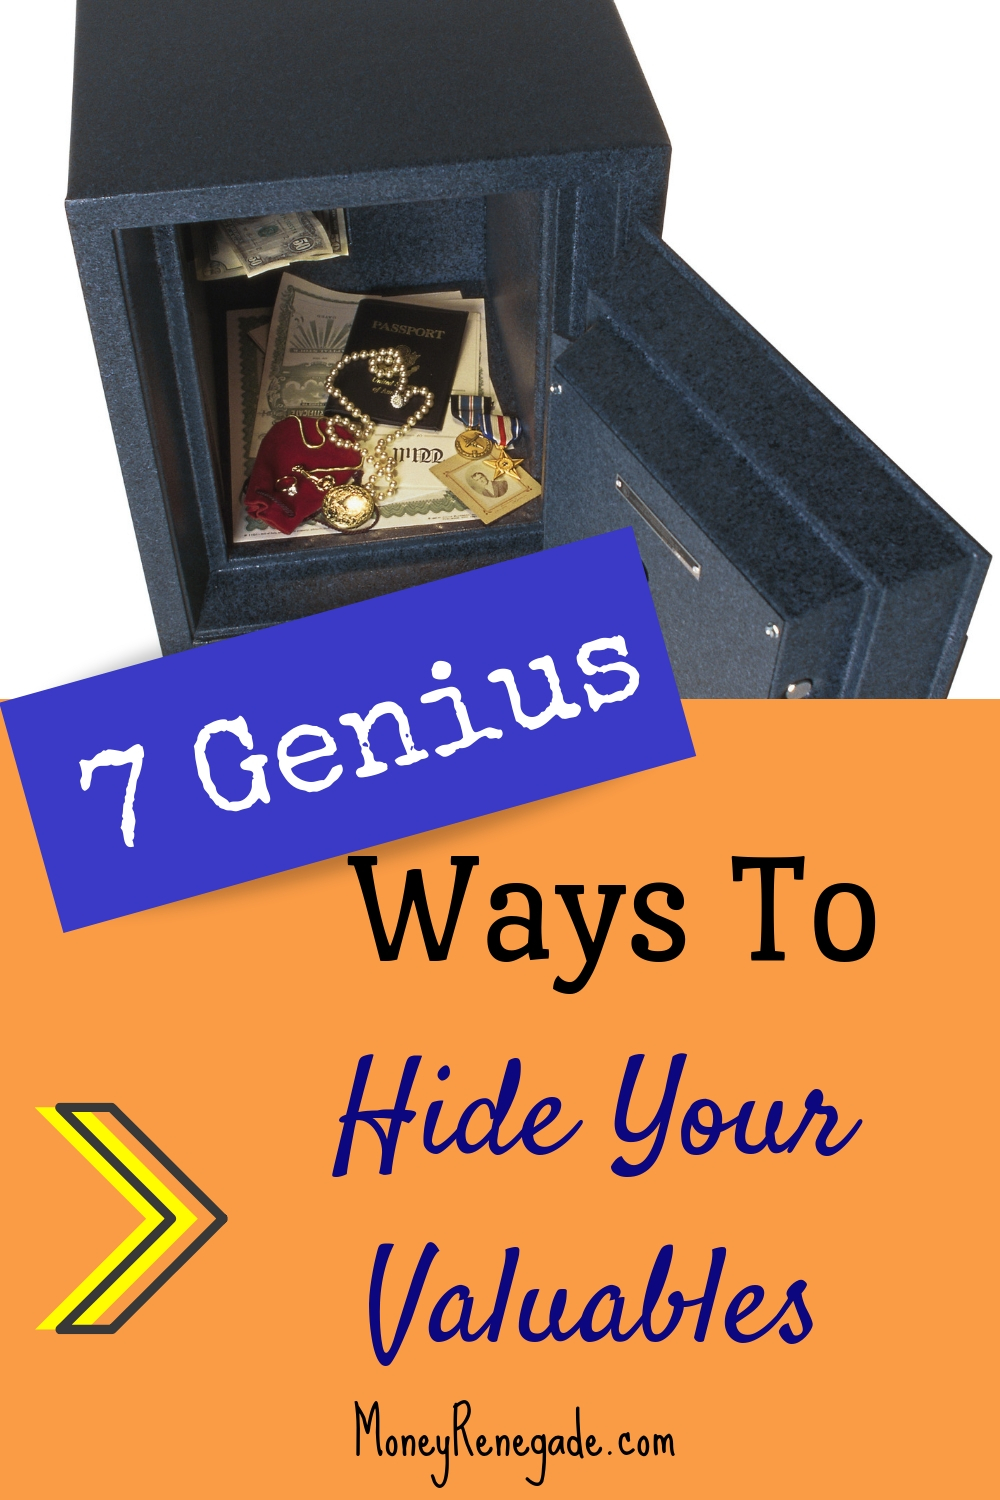 Genius ways to hide your valuables